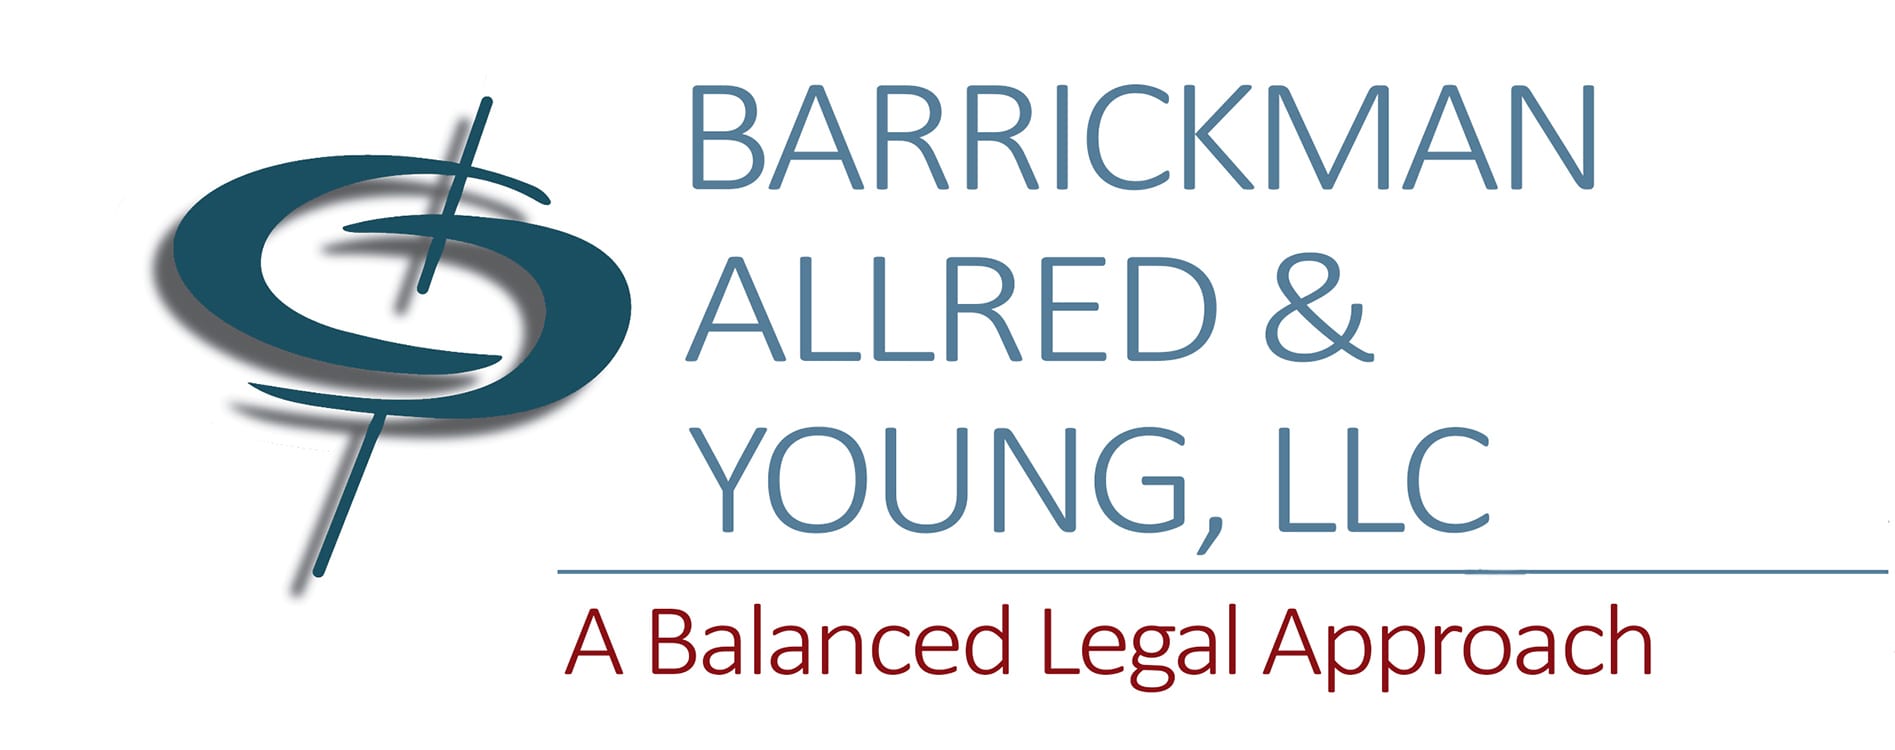 Barrickman, Allred & Young, LLC